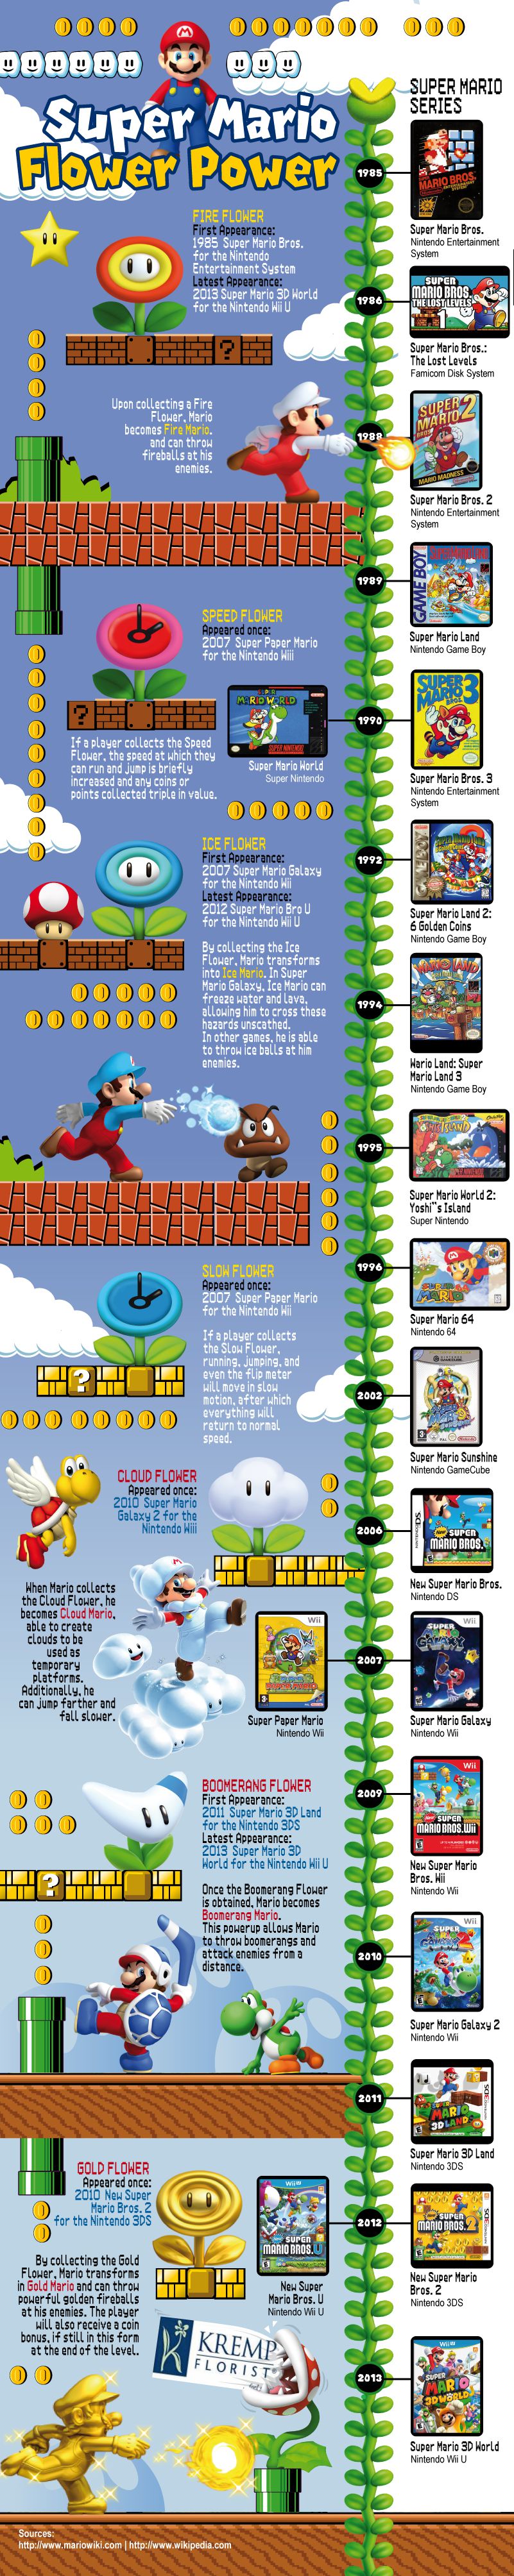 Super-Mario-Flower-Power-infographic-infographie-liste-fleur-history [801 x 4017]